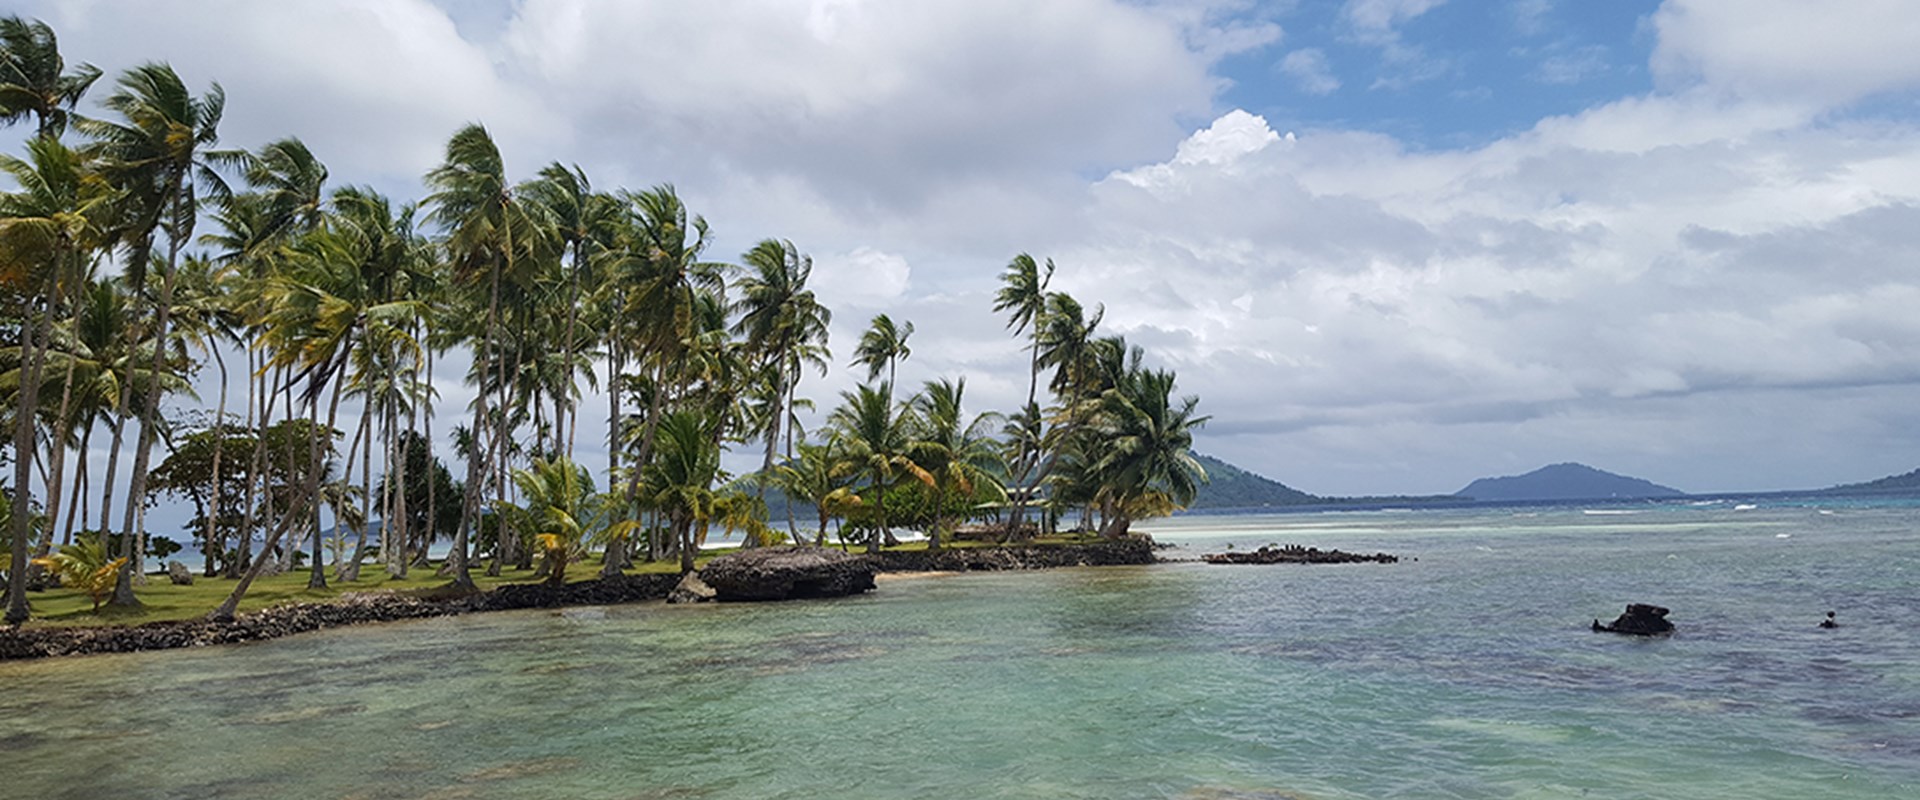 Micronesia island shoreline